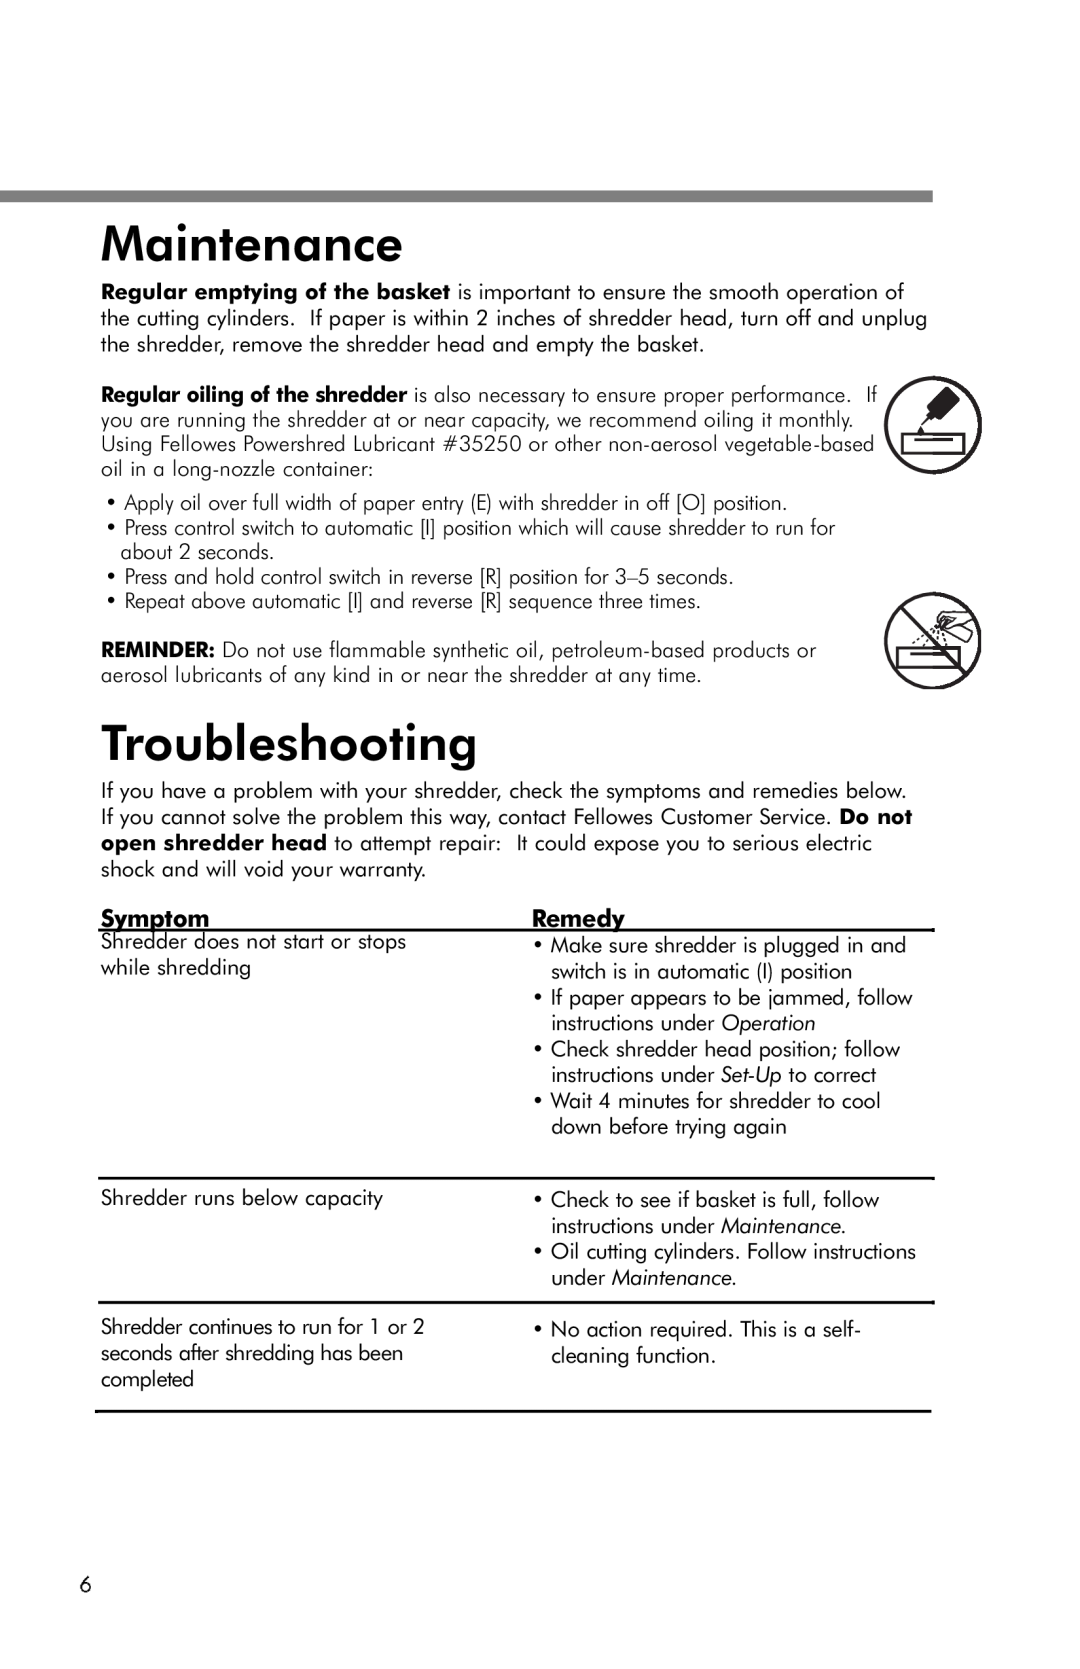 Fellowes T440C manual Troubleshooting, Symptom, Remedy, under Maintenance 